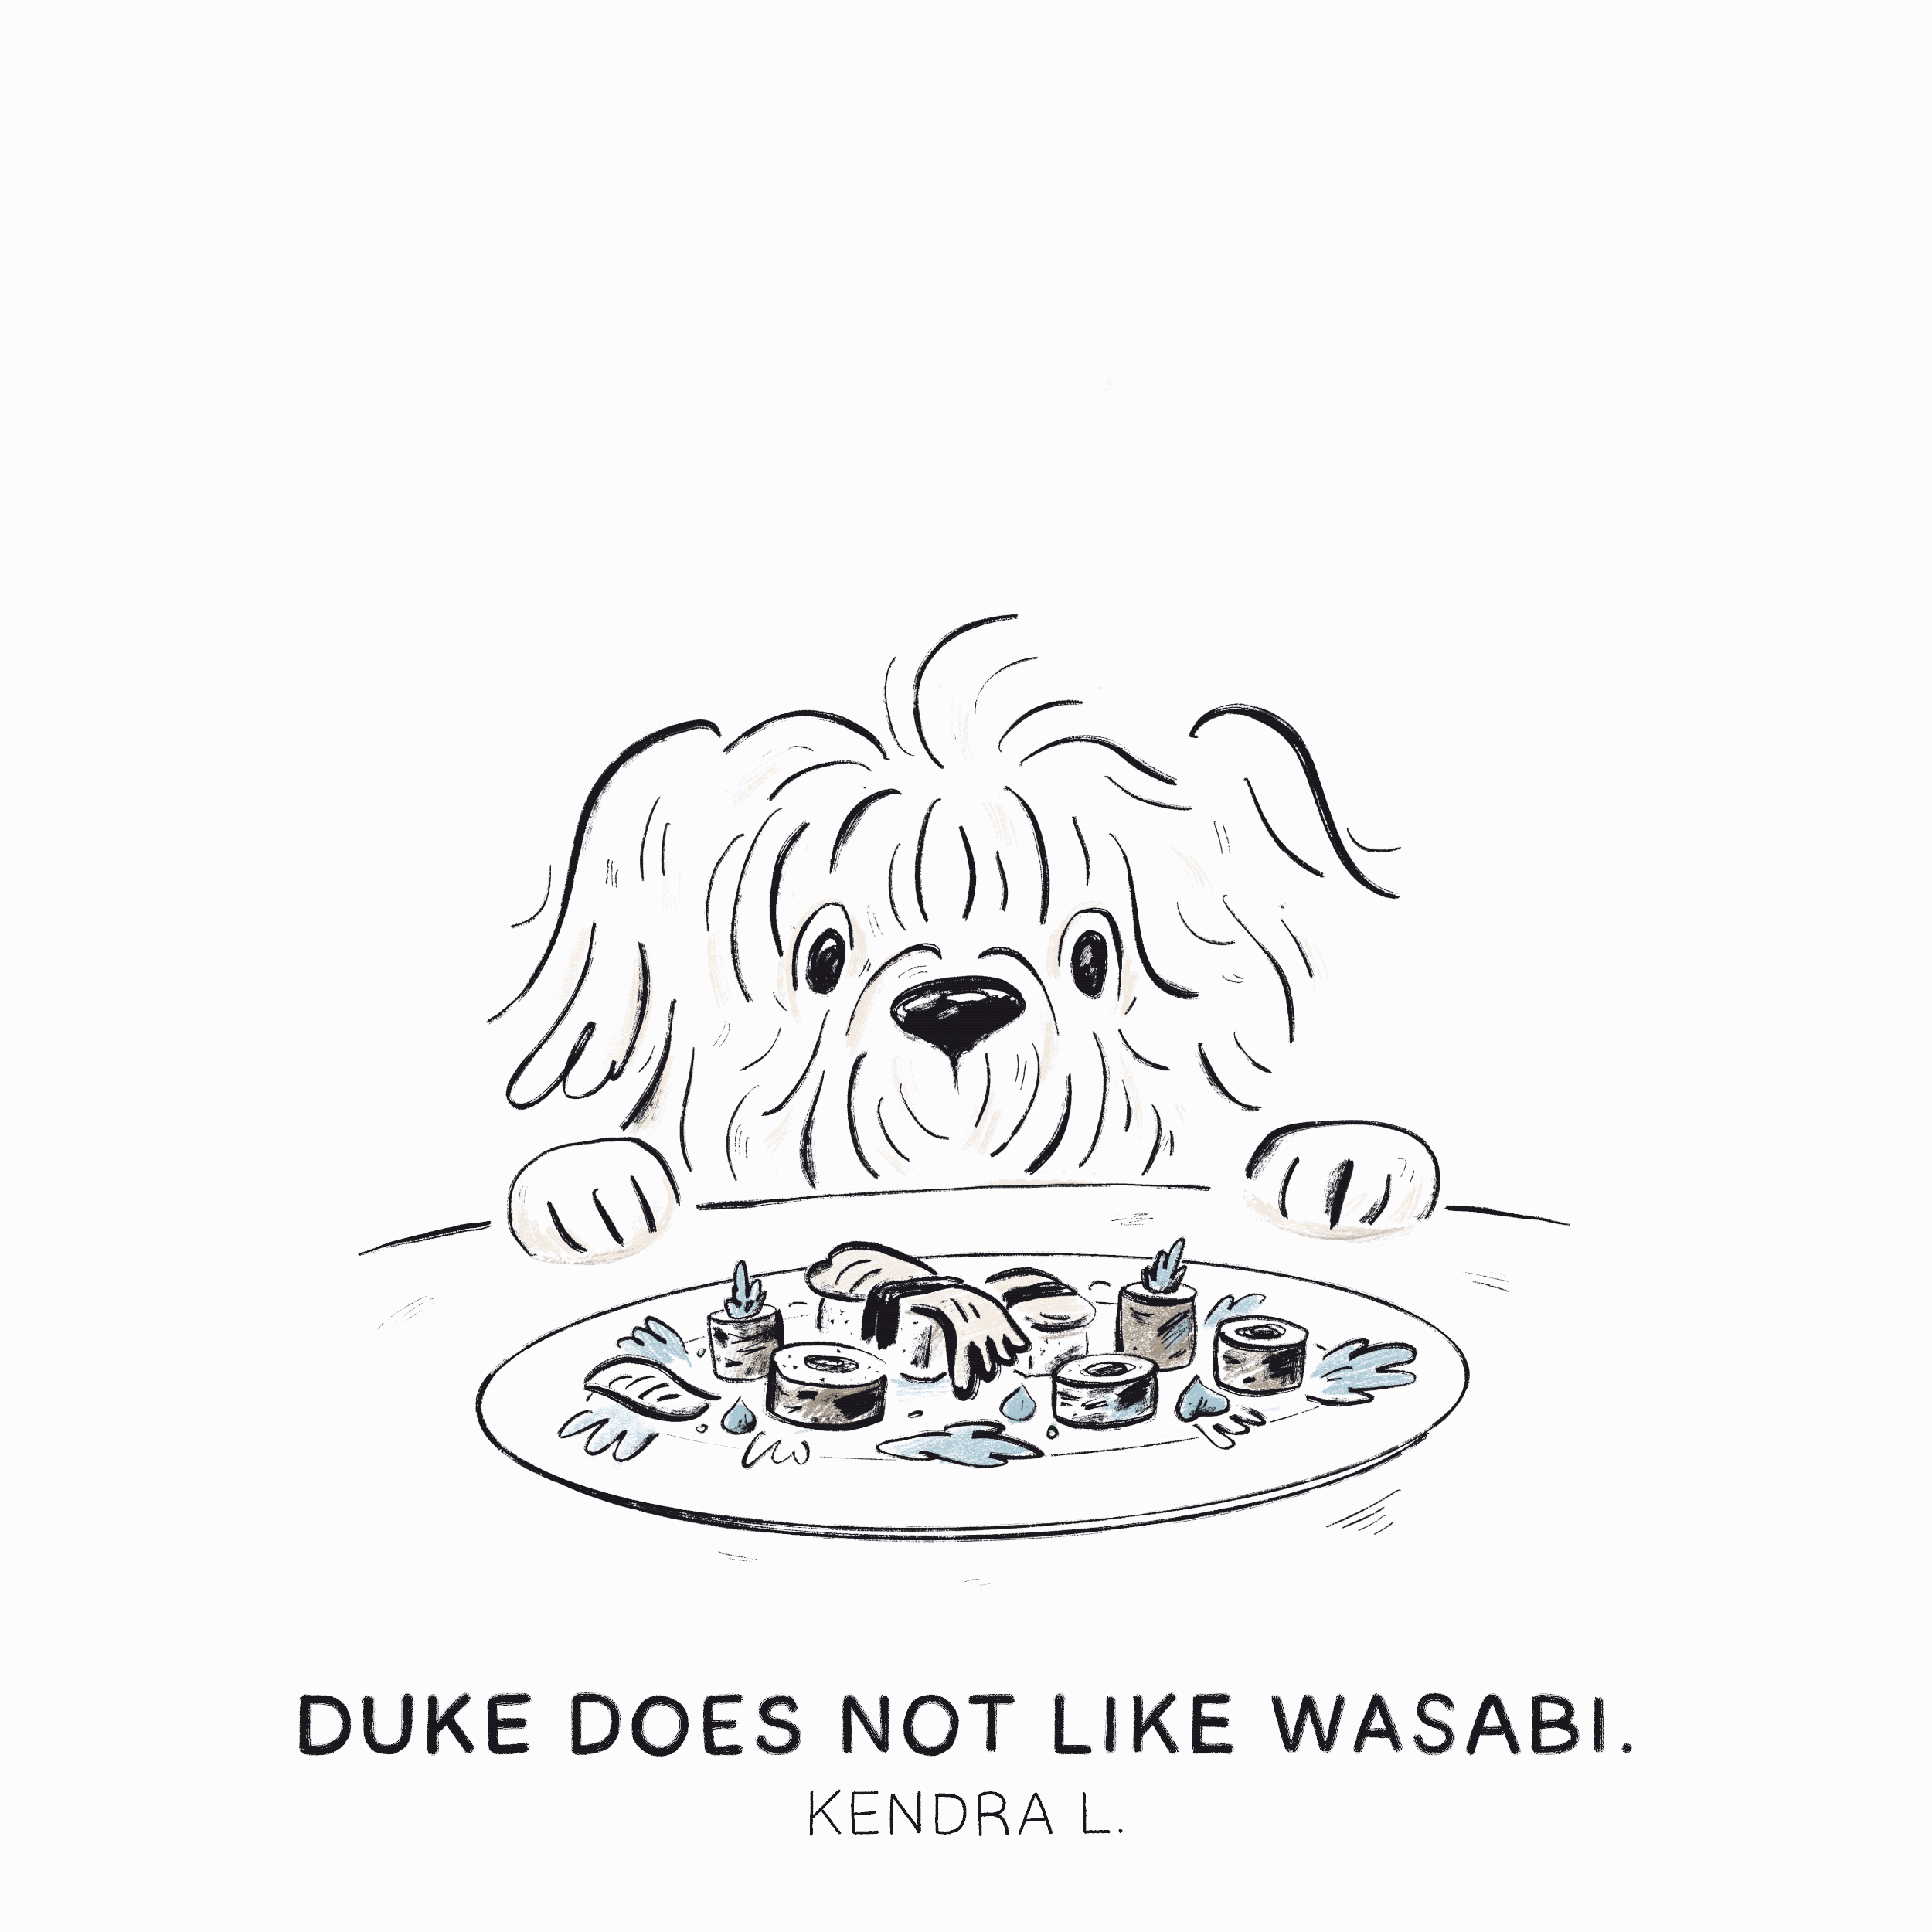 wasabi.gif